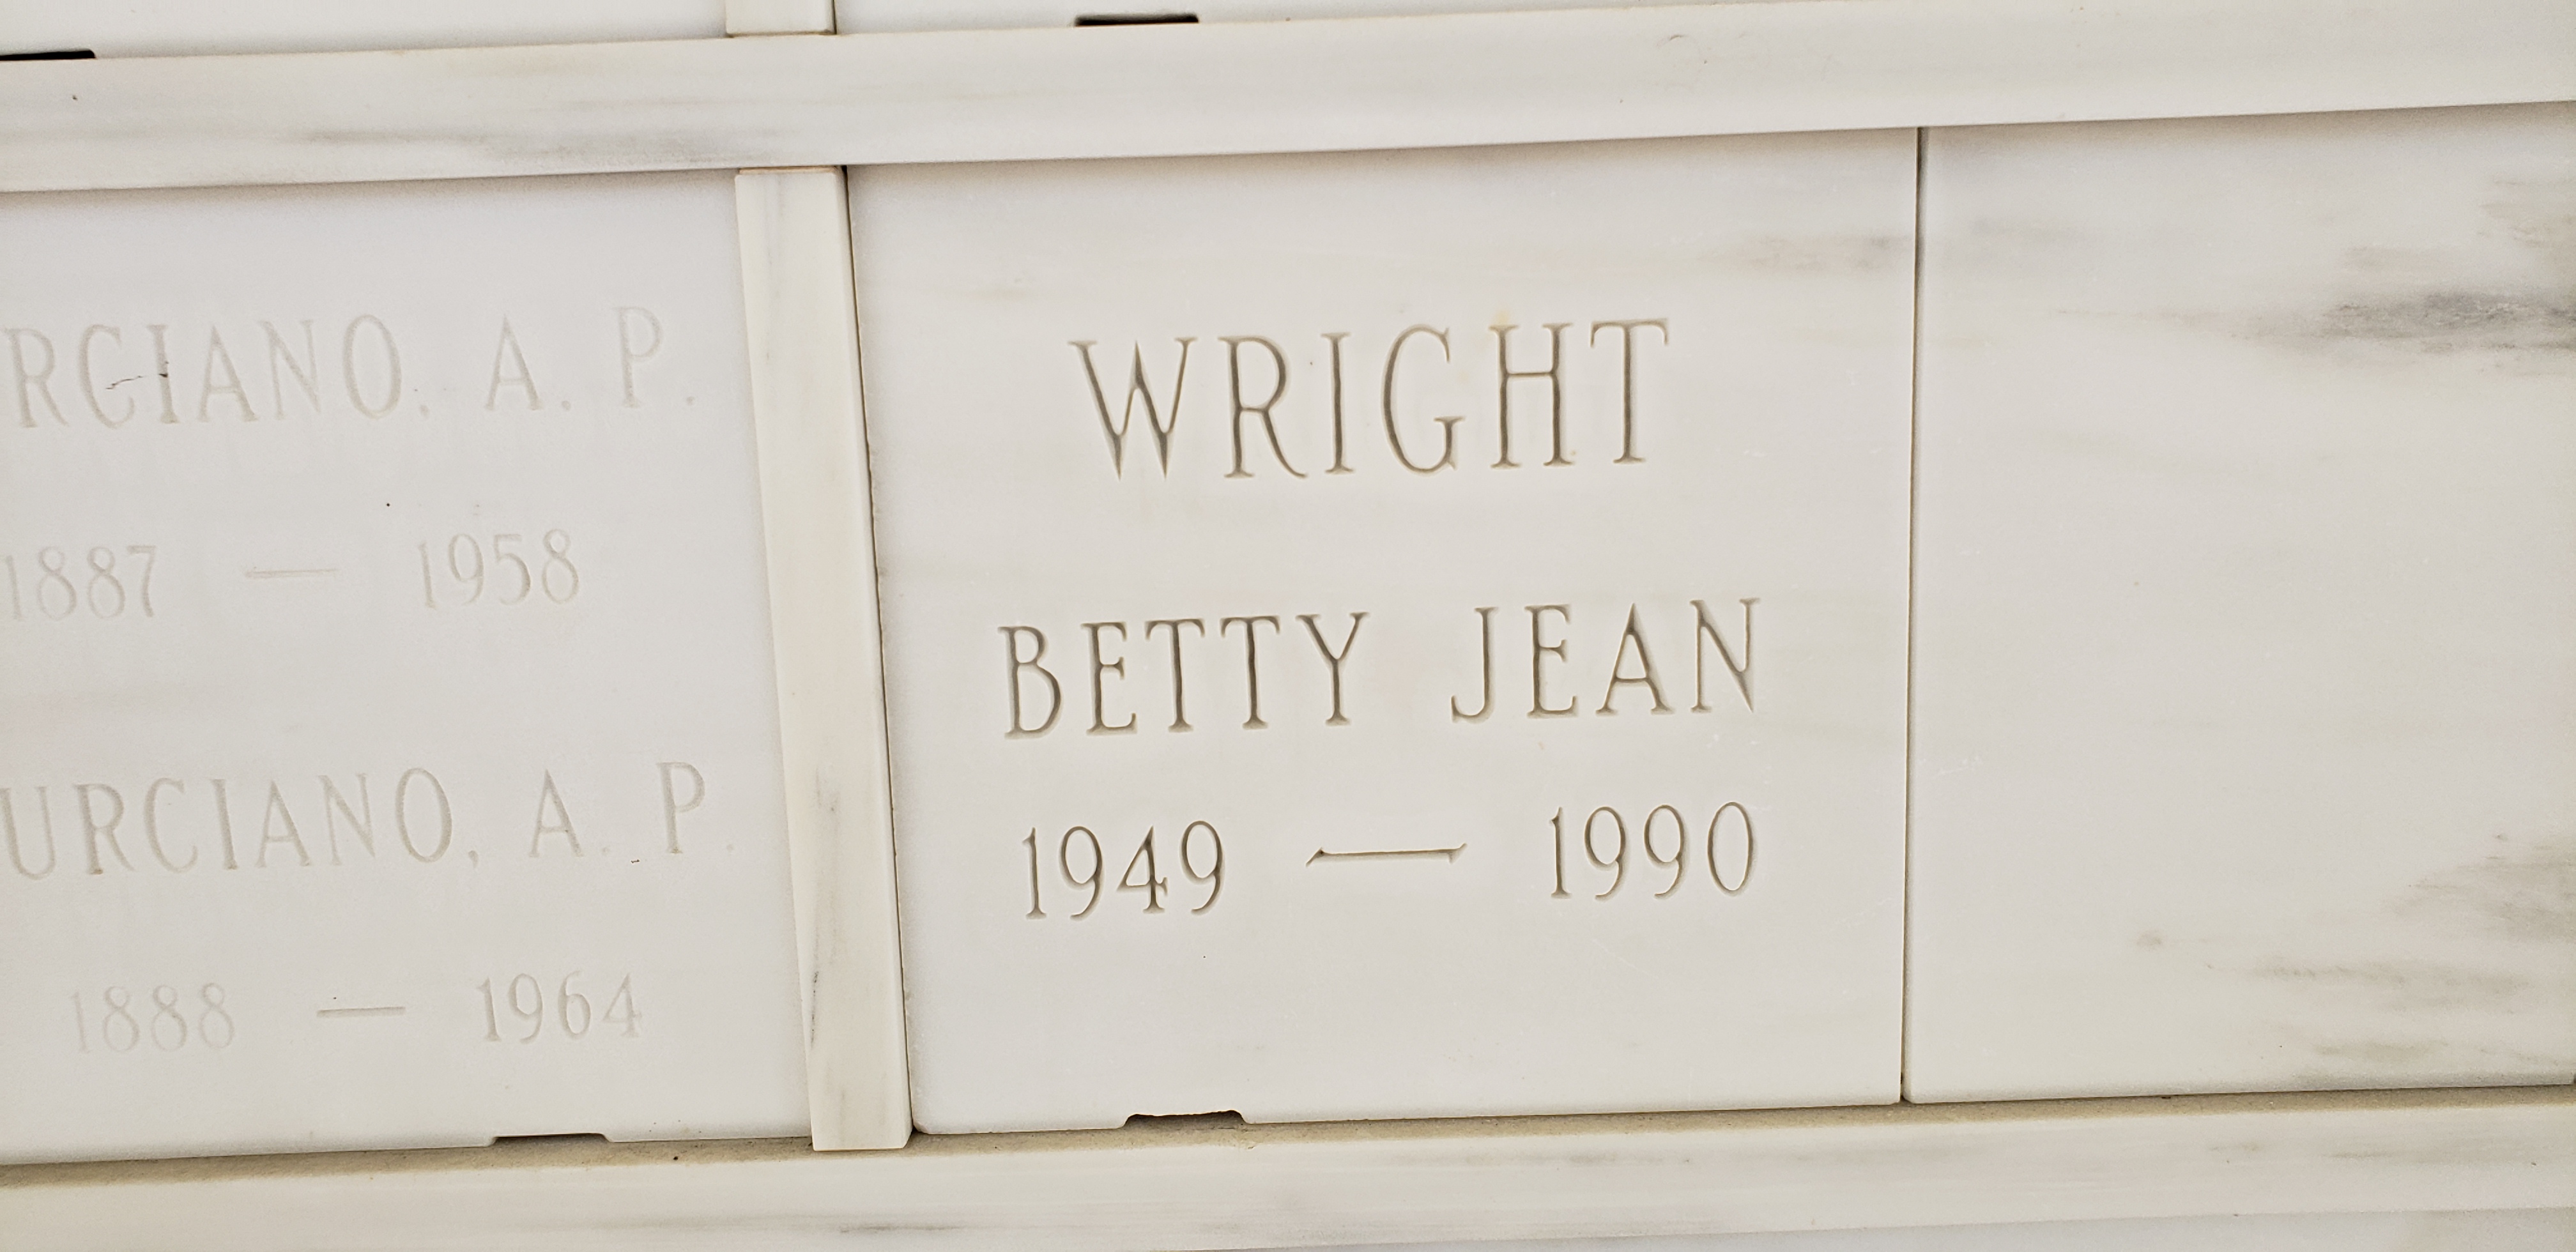 Betty Jean Wright